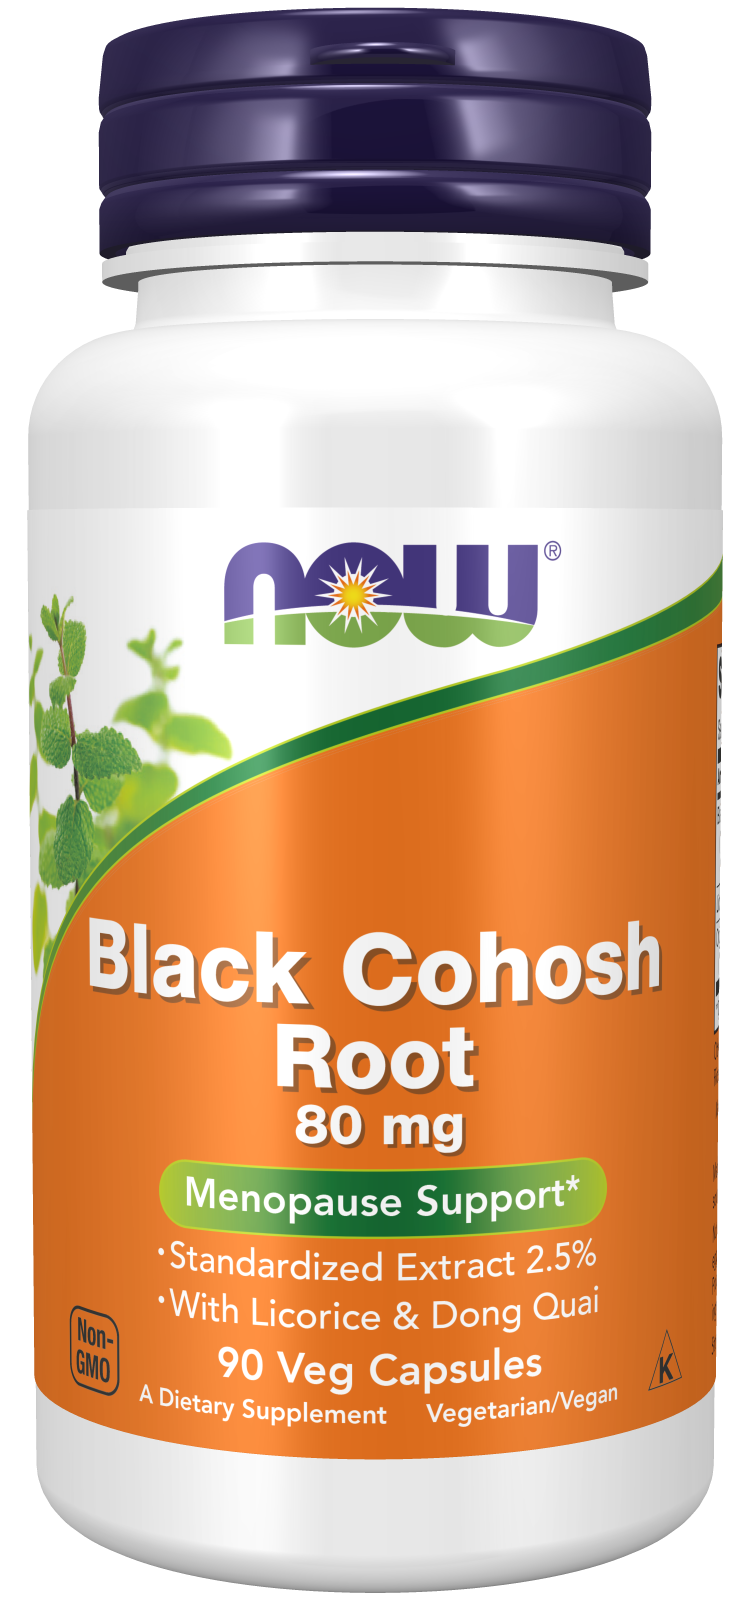 Black Cohosh Root 80 mg - 90 Veg Capsules Bottle Front